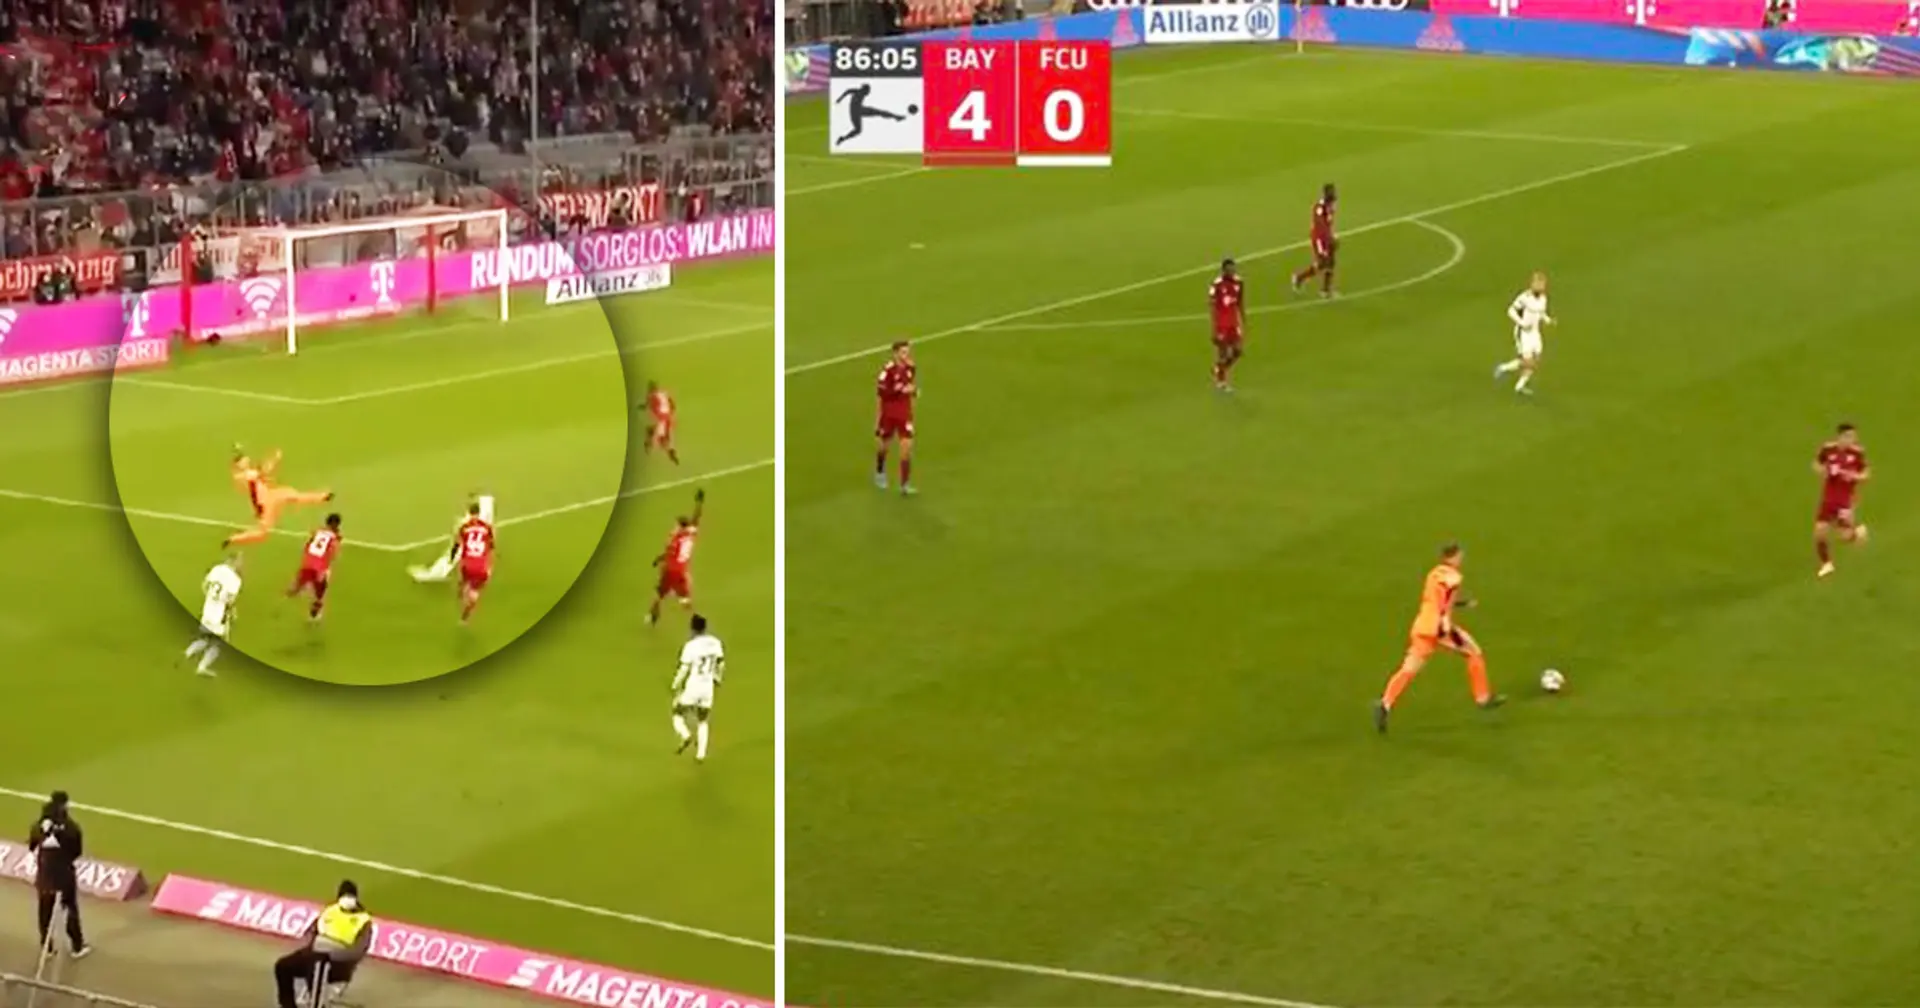 Manuel Neuer plays as a defensive midfielder in Bundesliga game vs Union Berlin, makes a crazy save